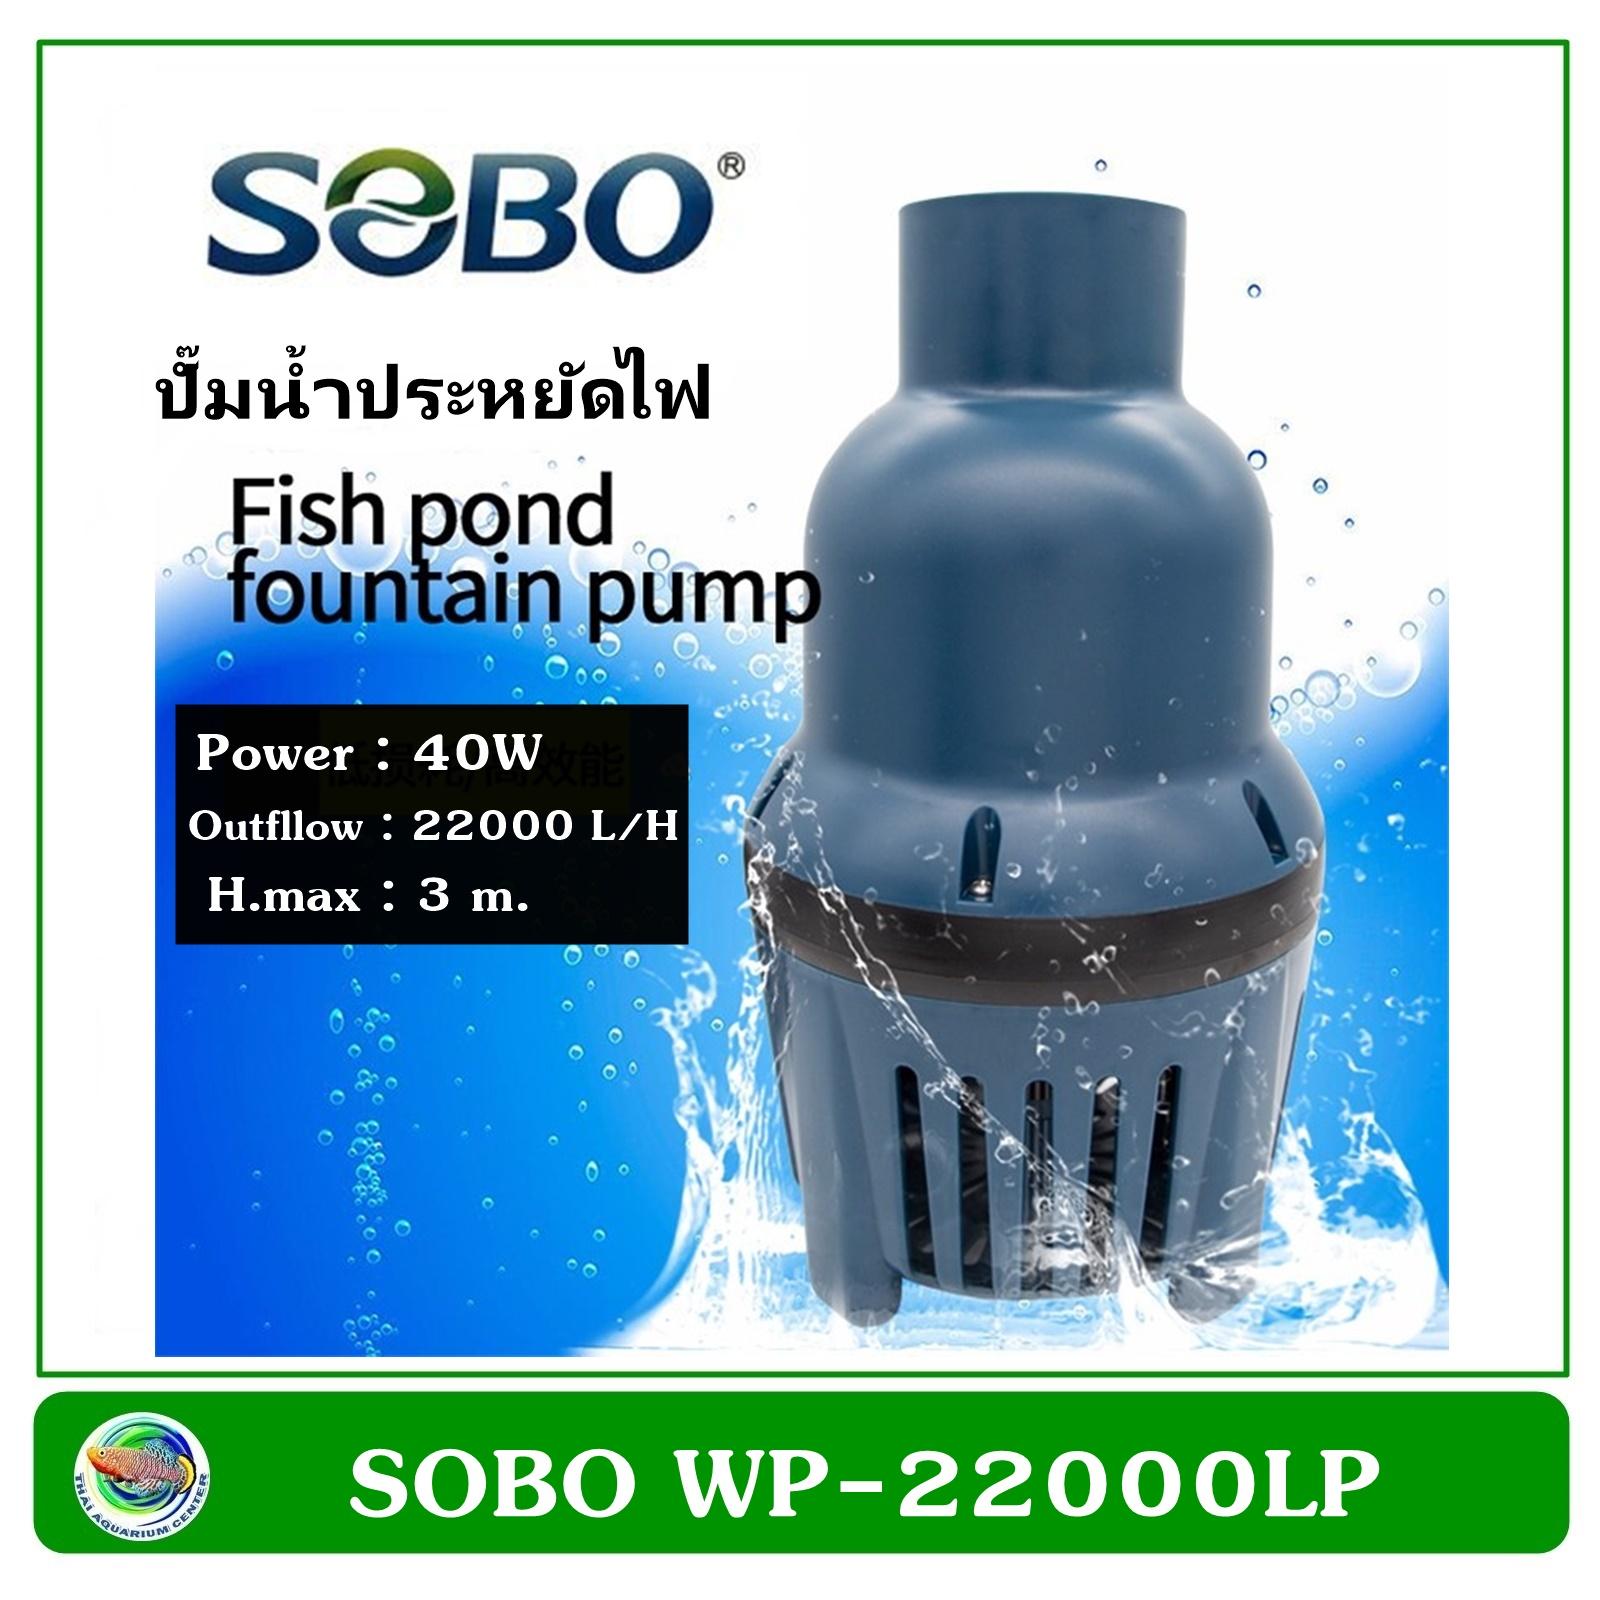 SOBO WP-22000LP ปั้มน้ำประหยัดไฟ ปั๊มน้ำ ปั๊มแช่ ปั๊มน้ำพุ ปั๊มน้ำบ่อปลา ปั๊มน้ำบ่อกรอง ECO PUMP Pond Pump